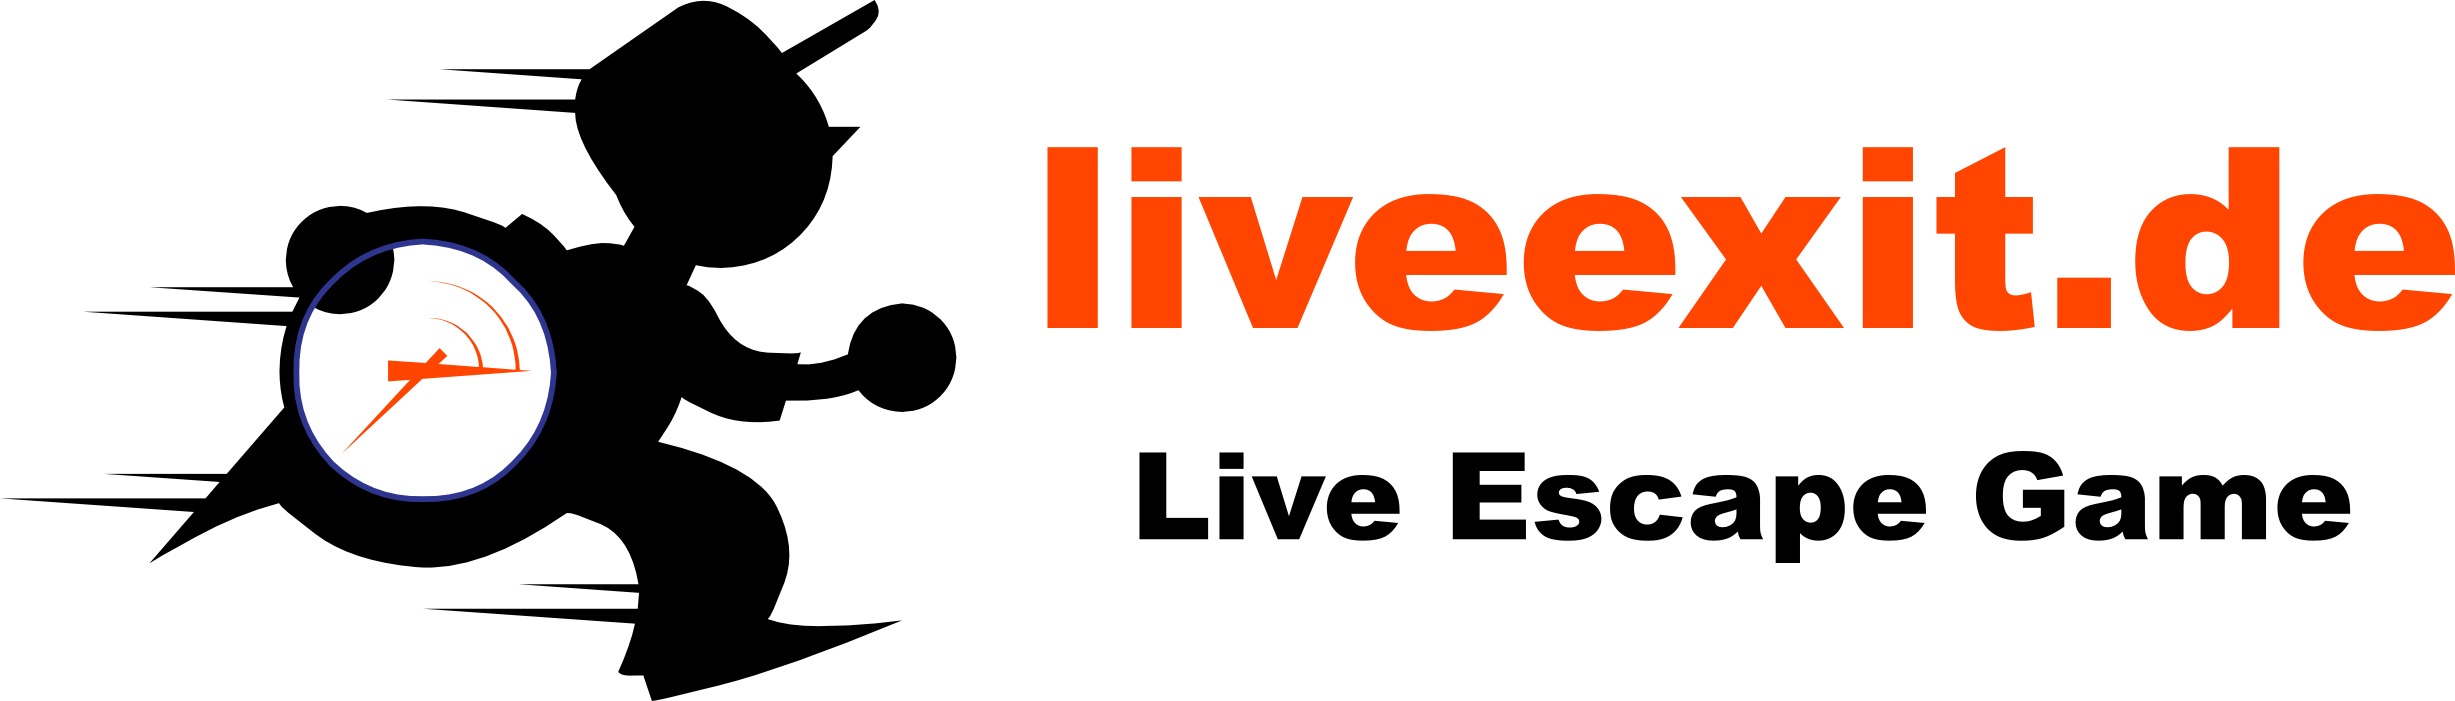 liveexit logo